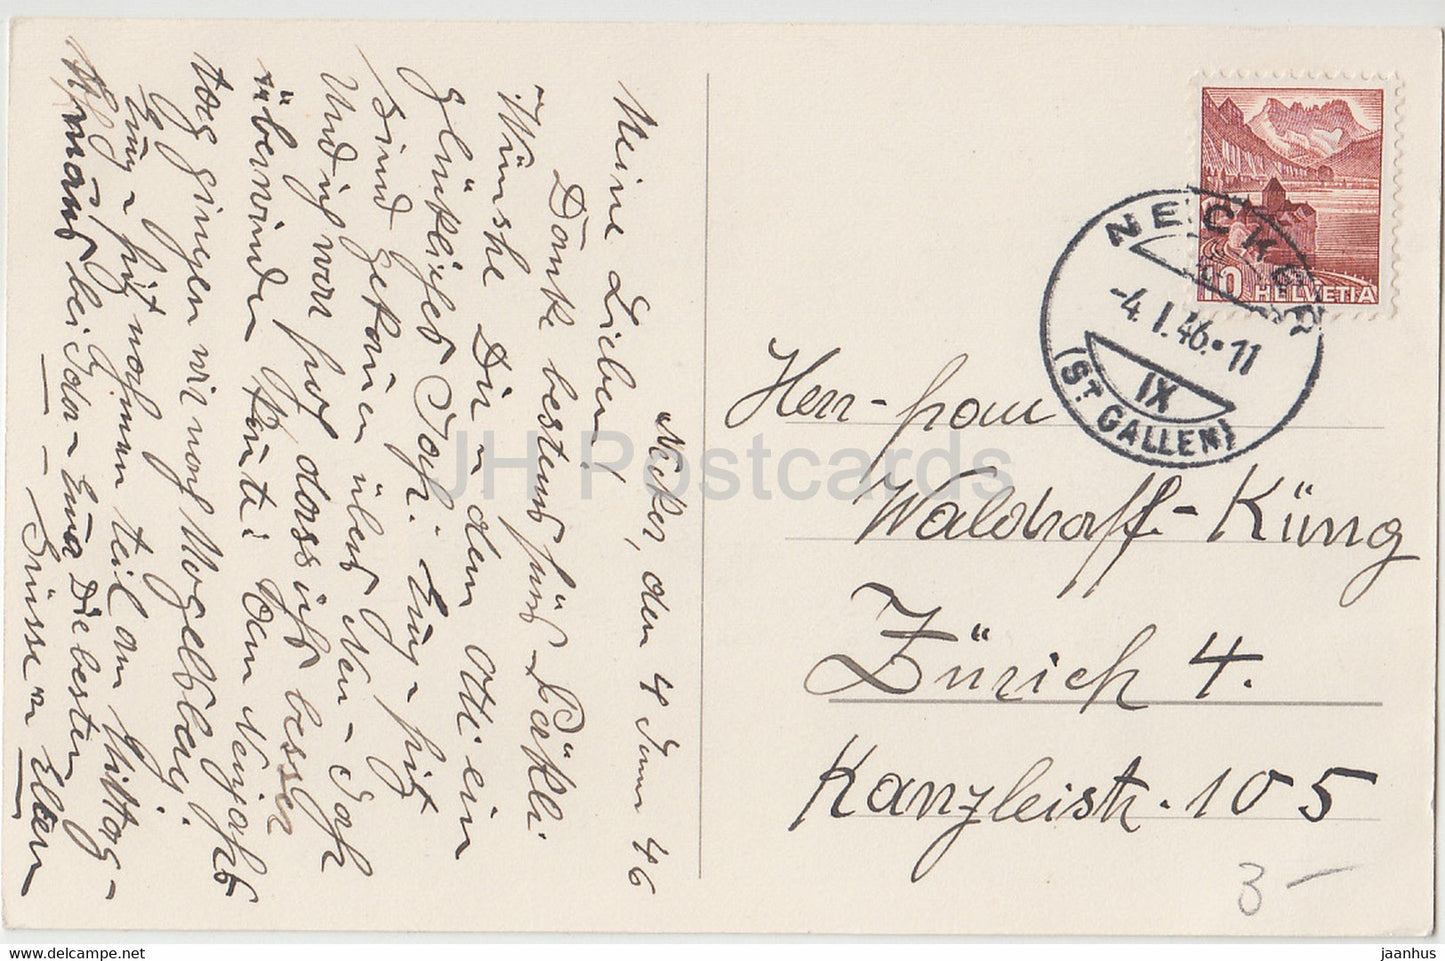 New Year Greeting Card - Viel Gluck im Neuen Jahr - girl - skiing - old postcard - 1946 - Germany - used